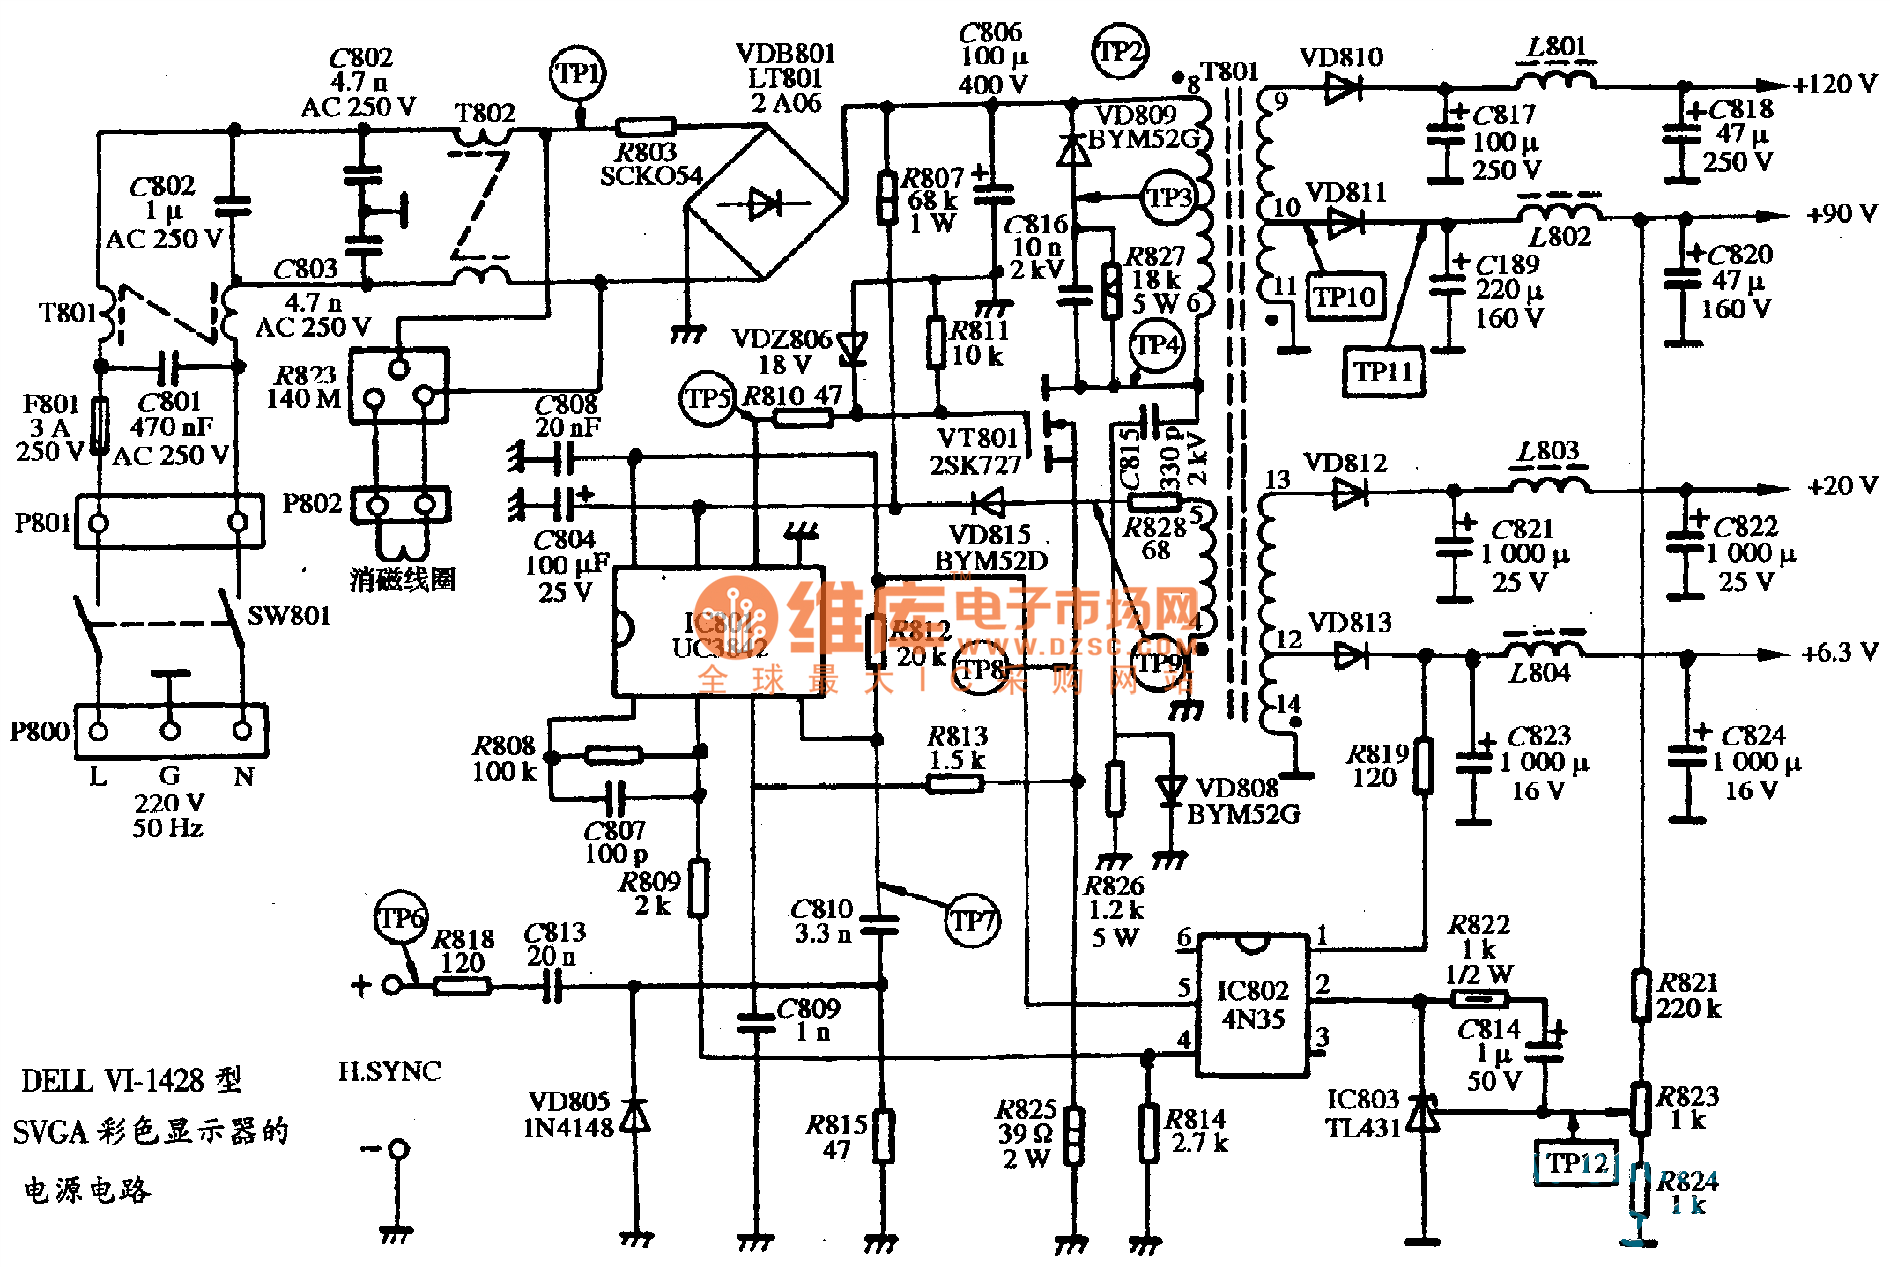 The power supply circuit diagram of DELL VI-1428 type SVGA color